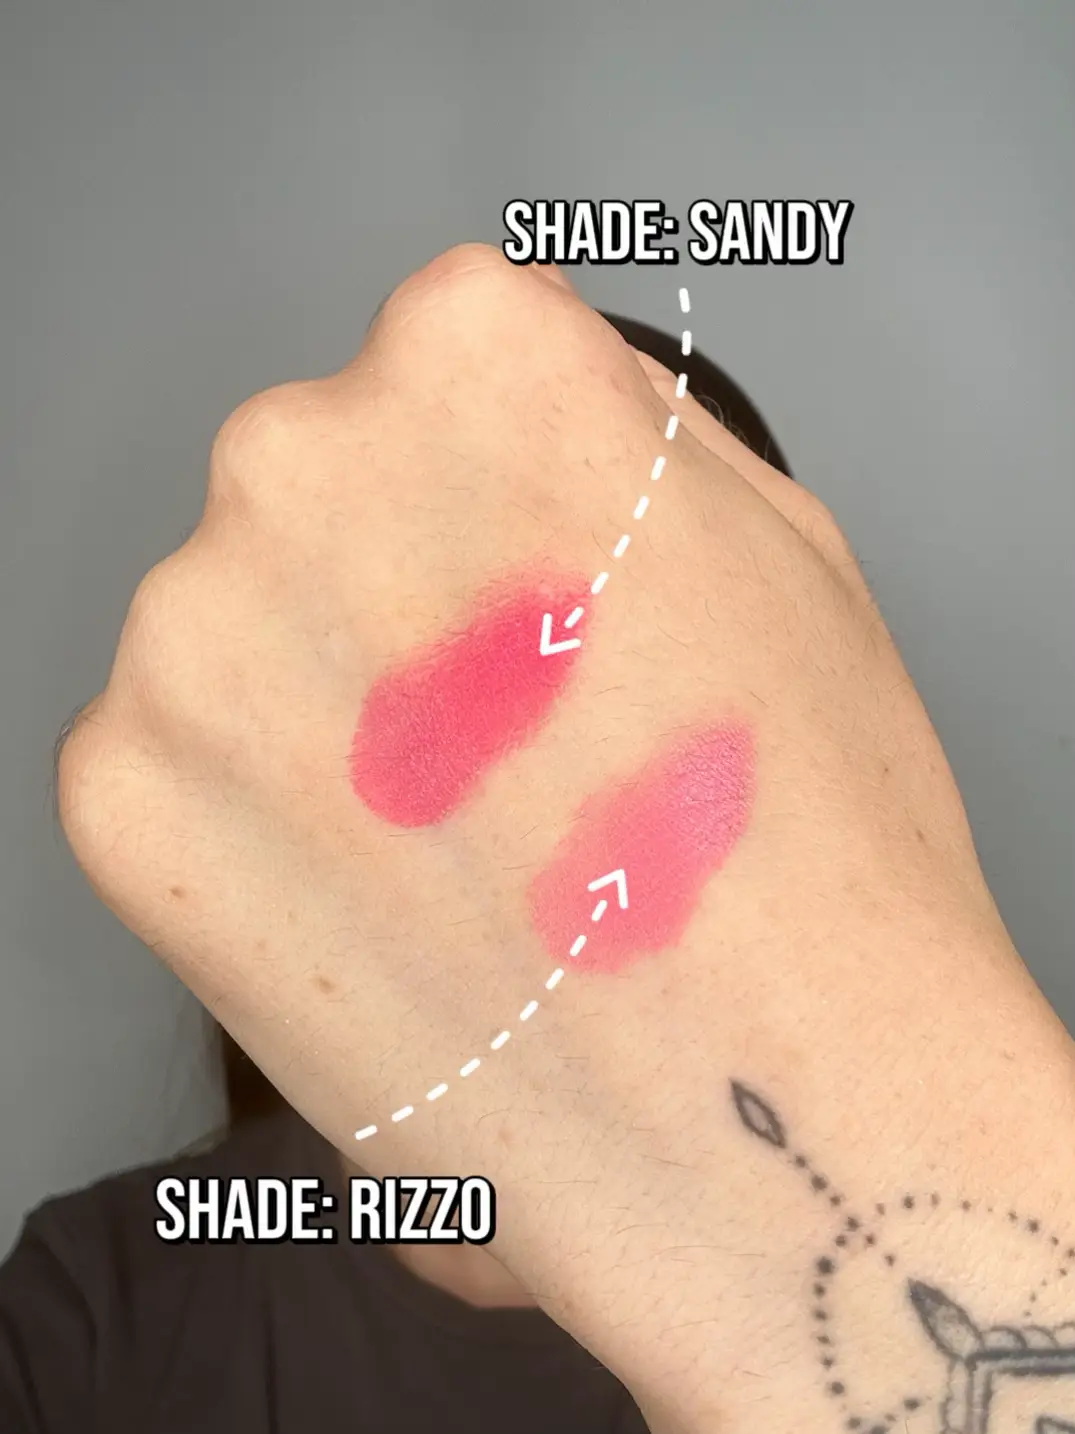 sandy grease makeup tutorial